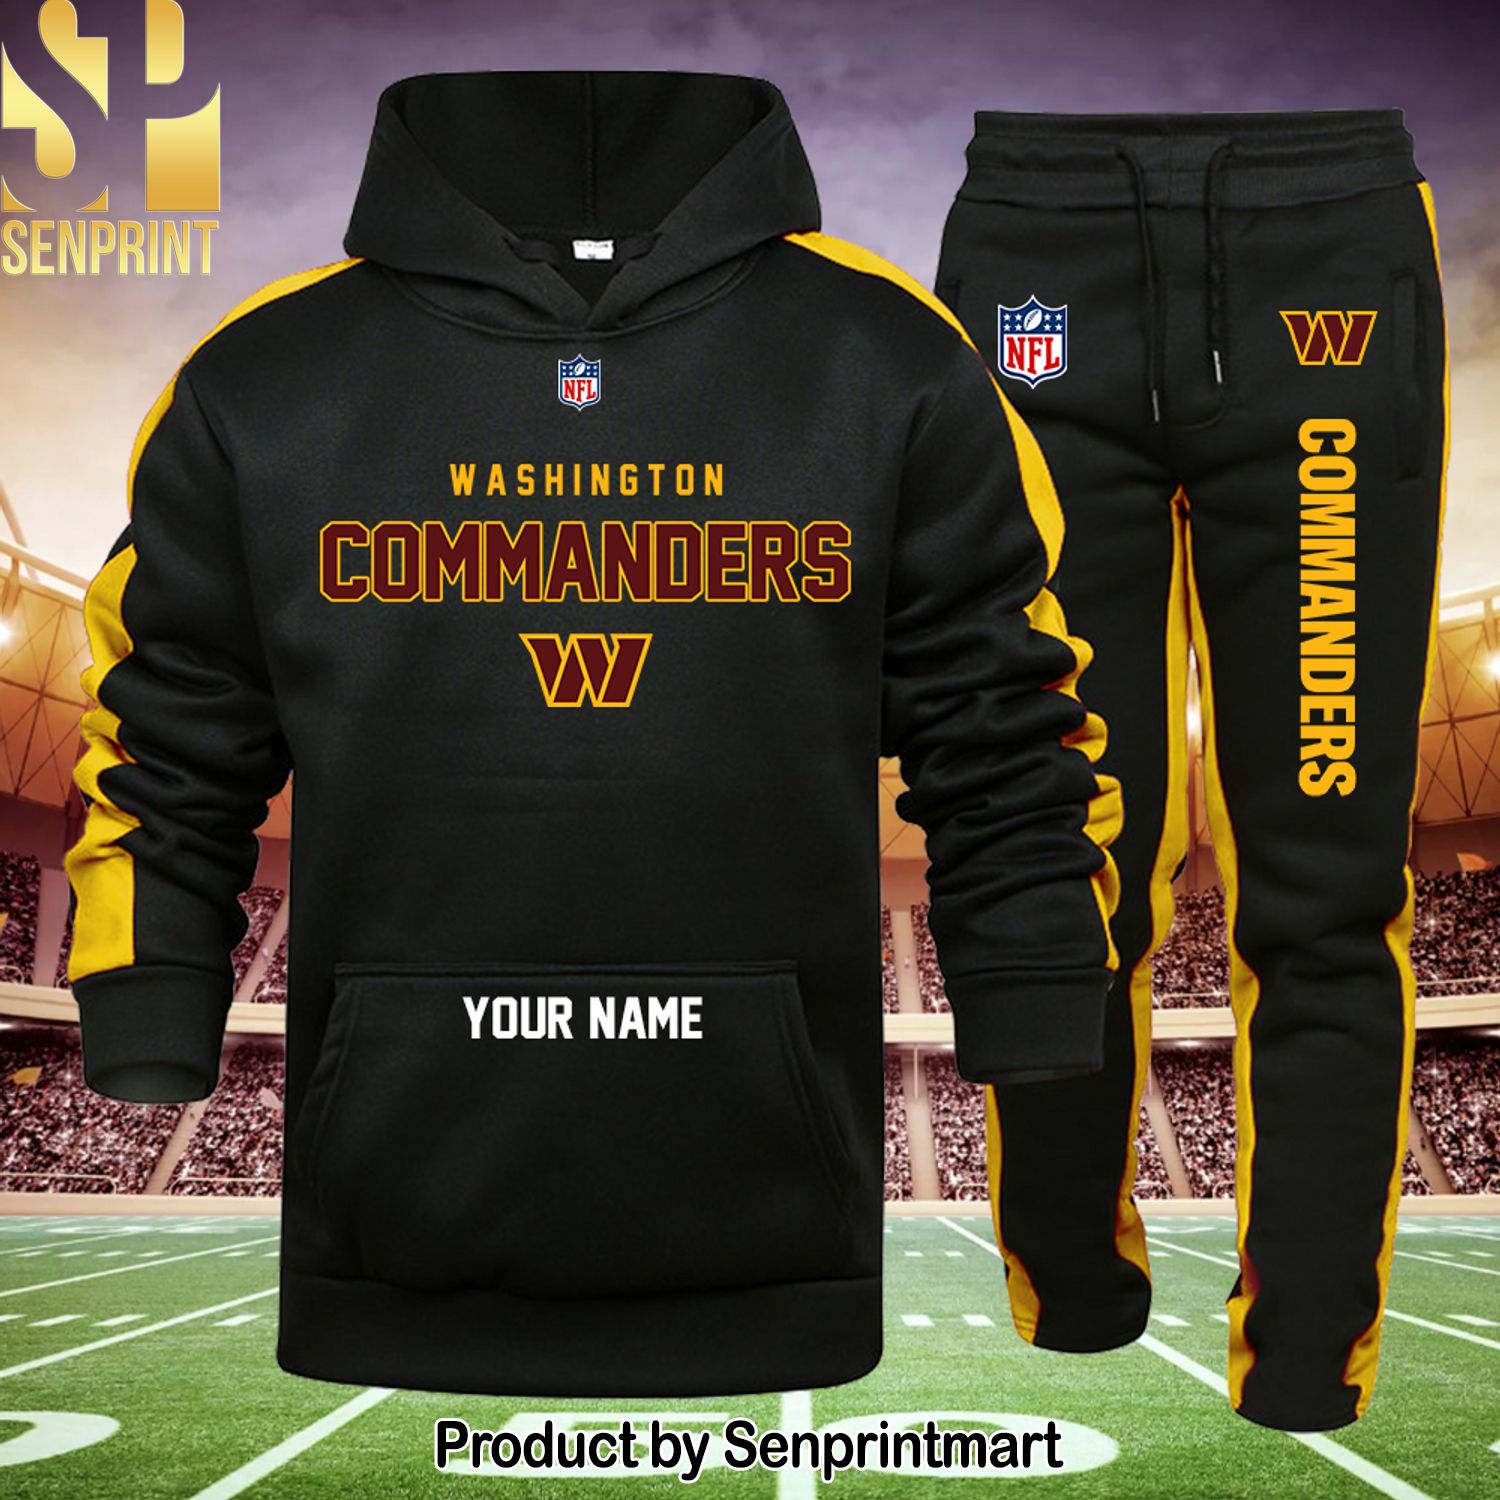 NFL Washington Commanders Classic Full Printing Shirt and Sweatpants